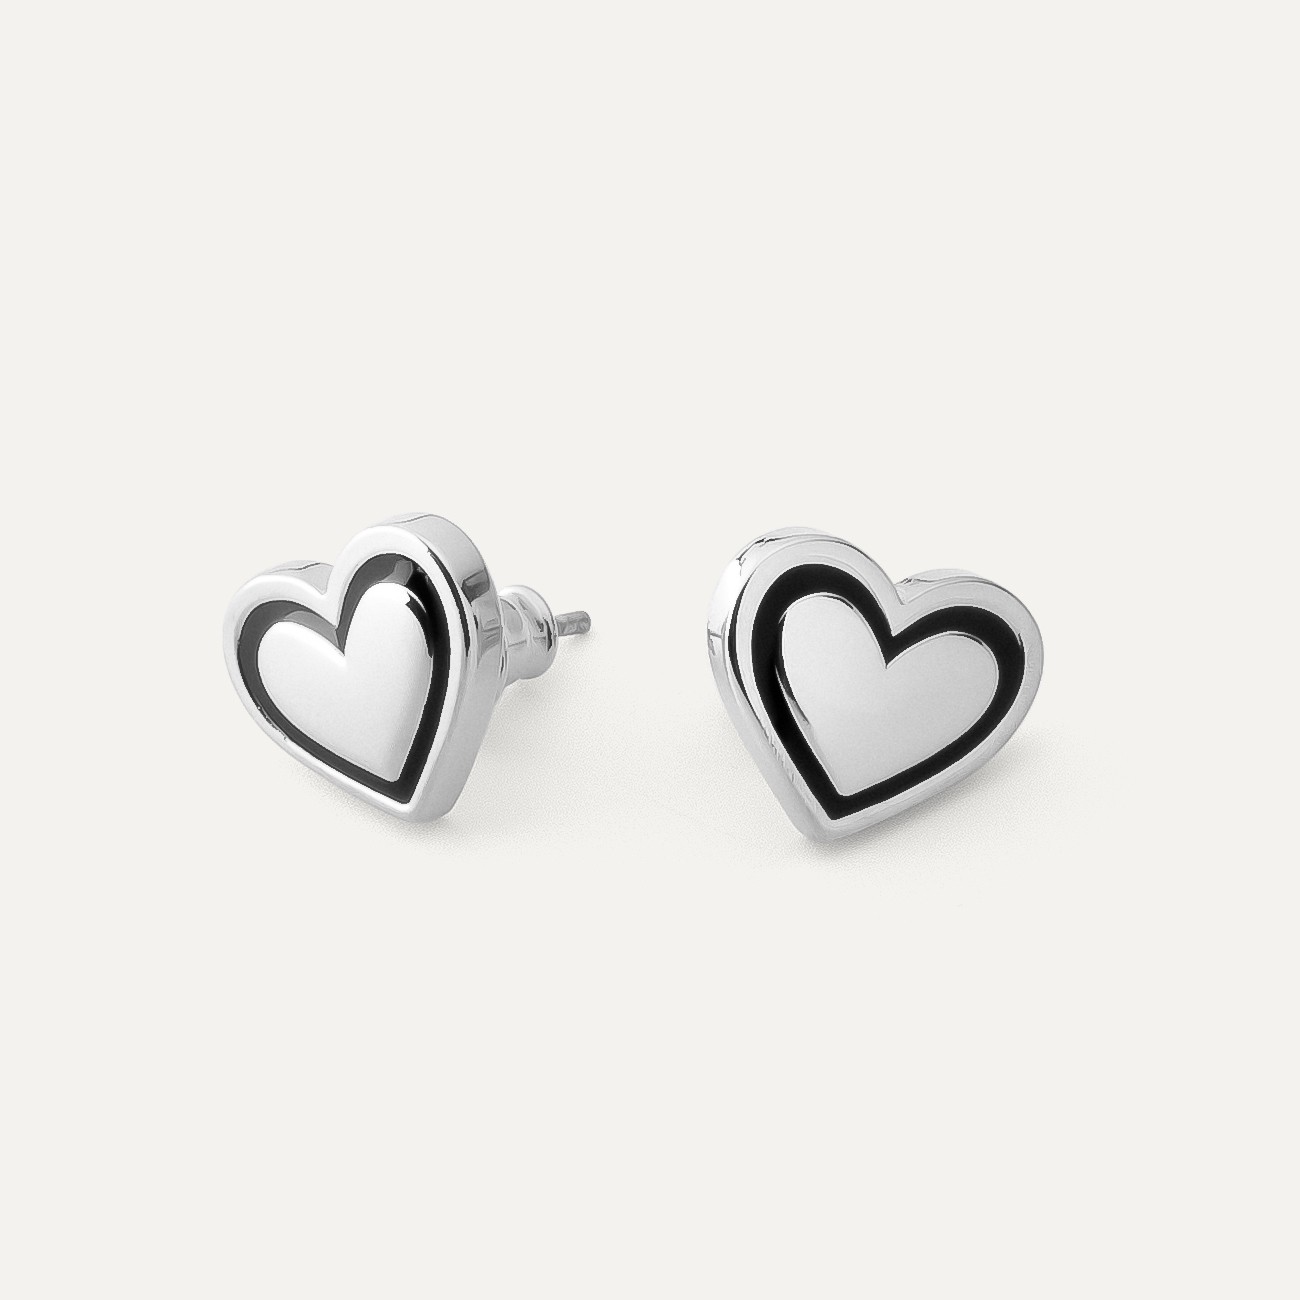 Heart earrings with black resin, sterling silver 925